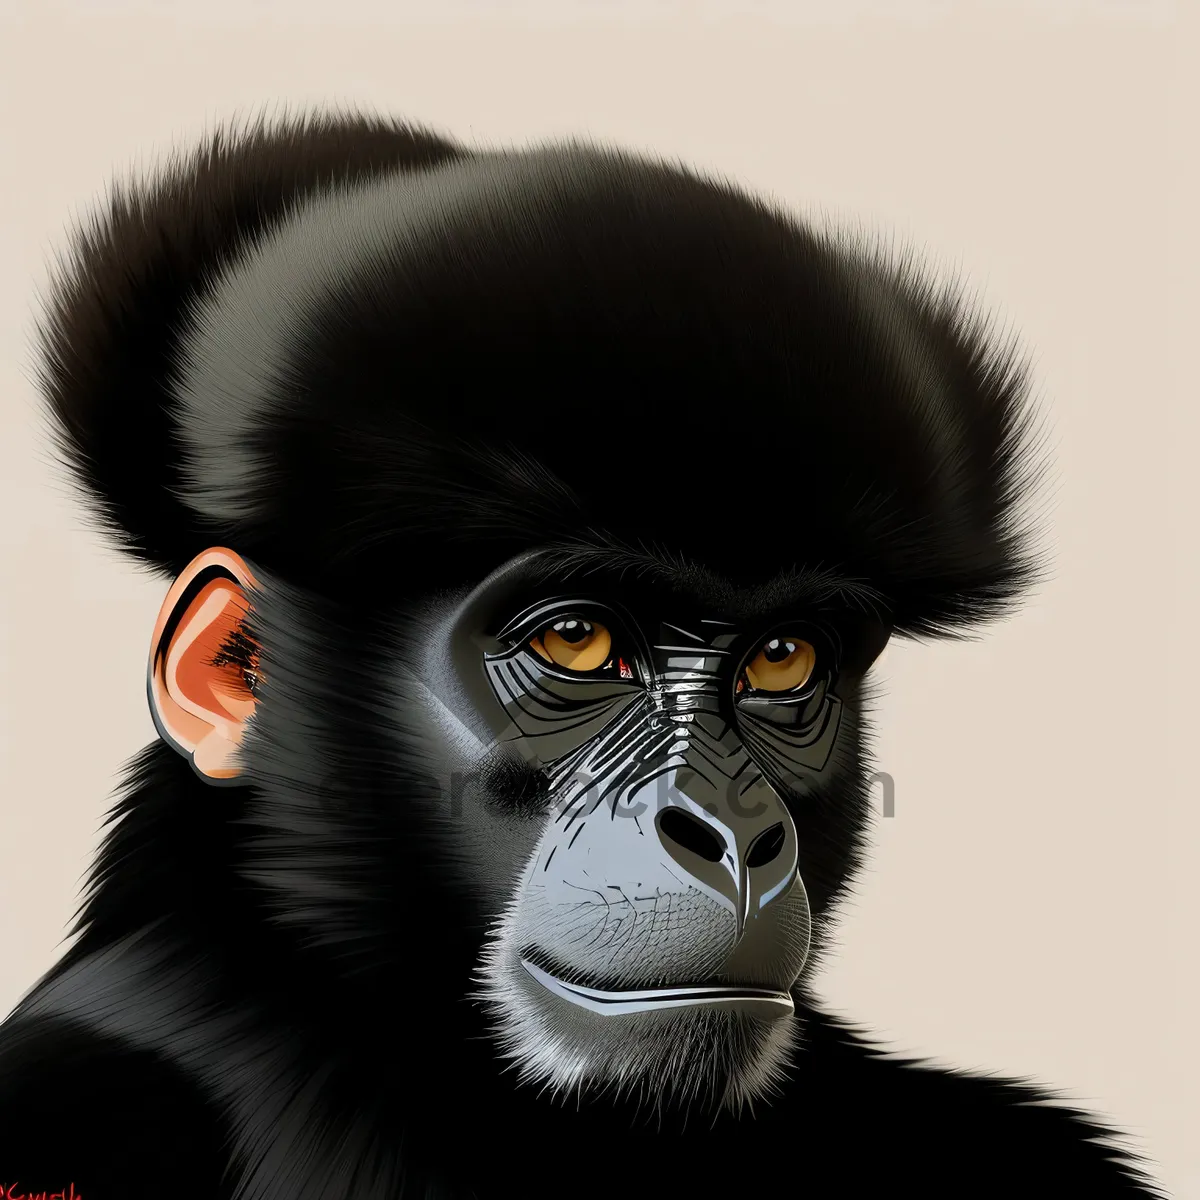 Picture of Wild Chimpanzee - Powerful Primate Portrait